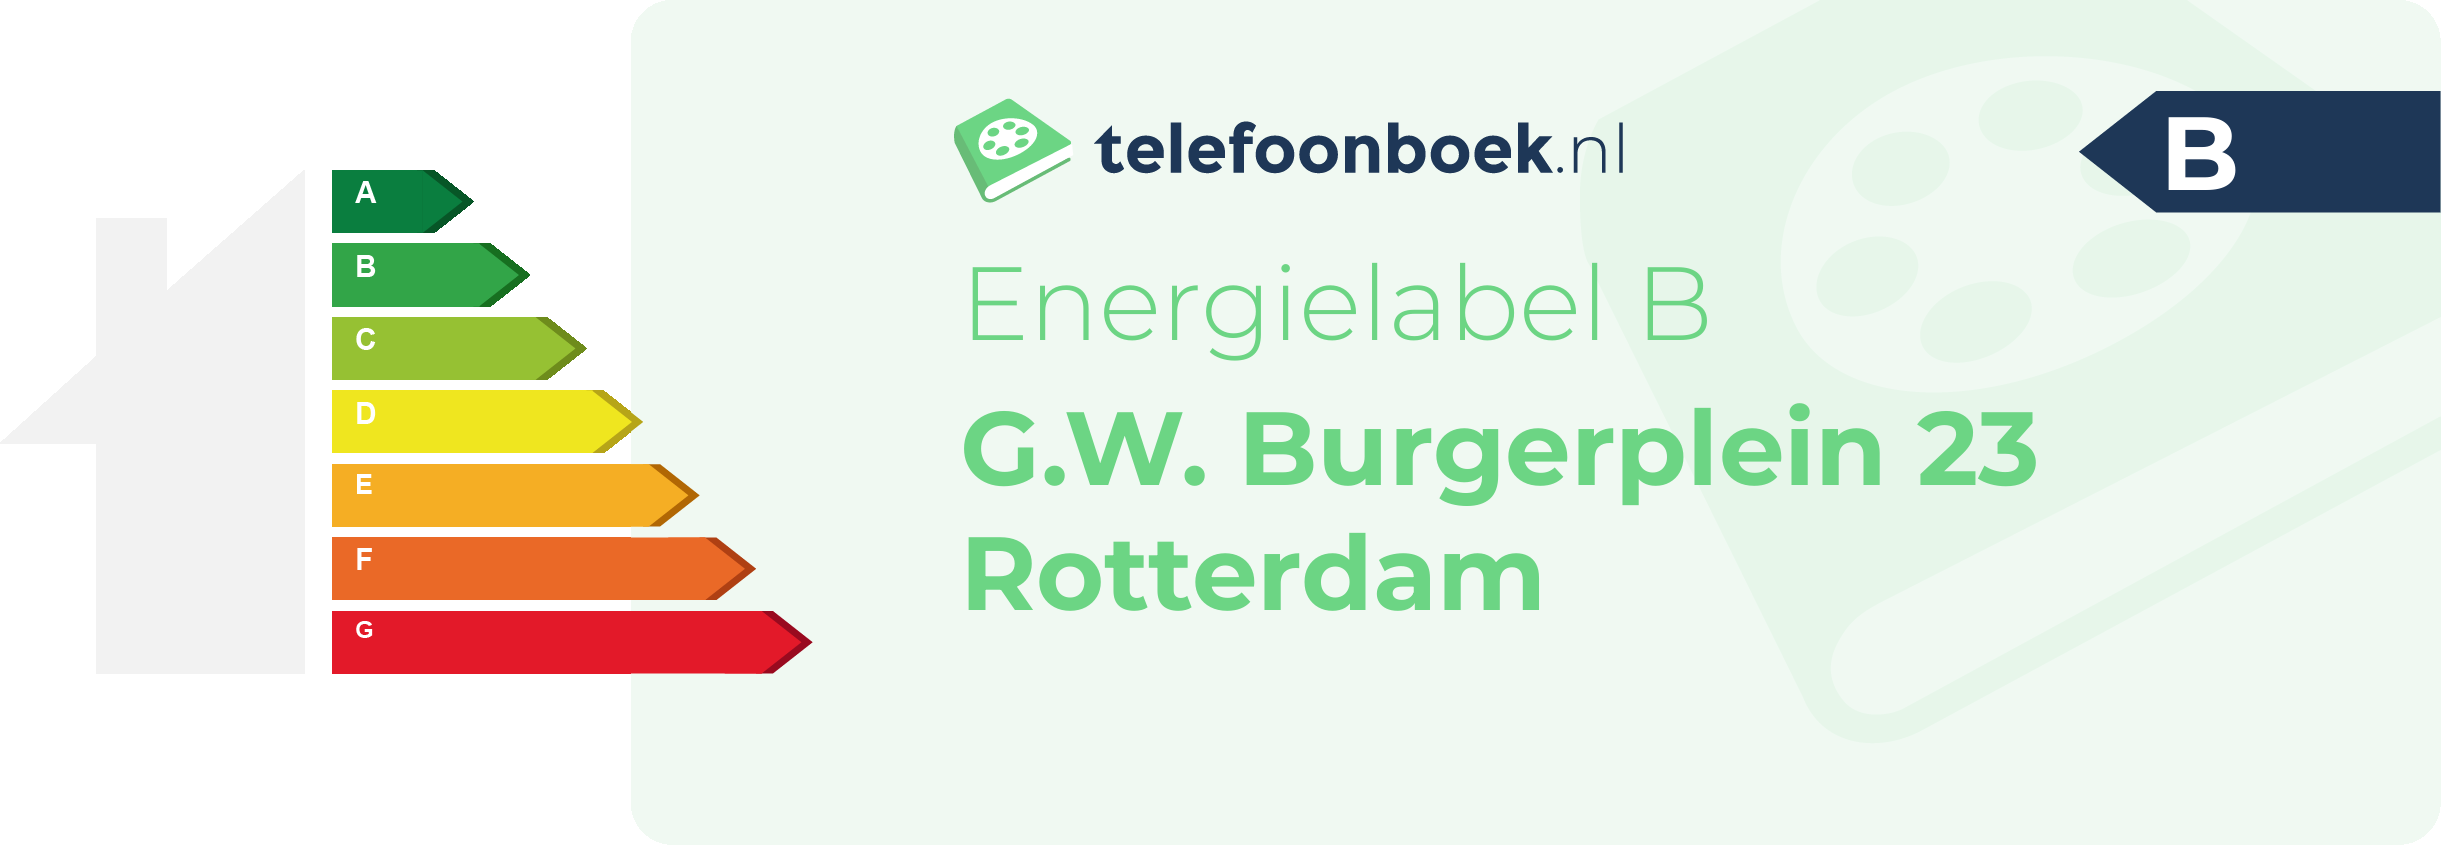 Energielabel G.W. Burgerplein 23 Rotterdam